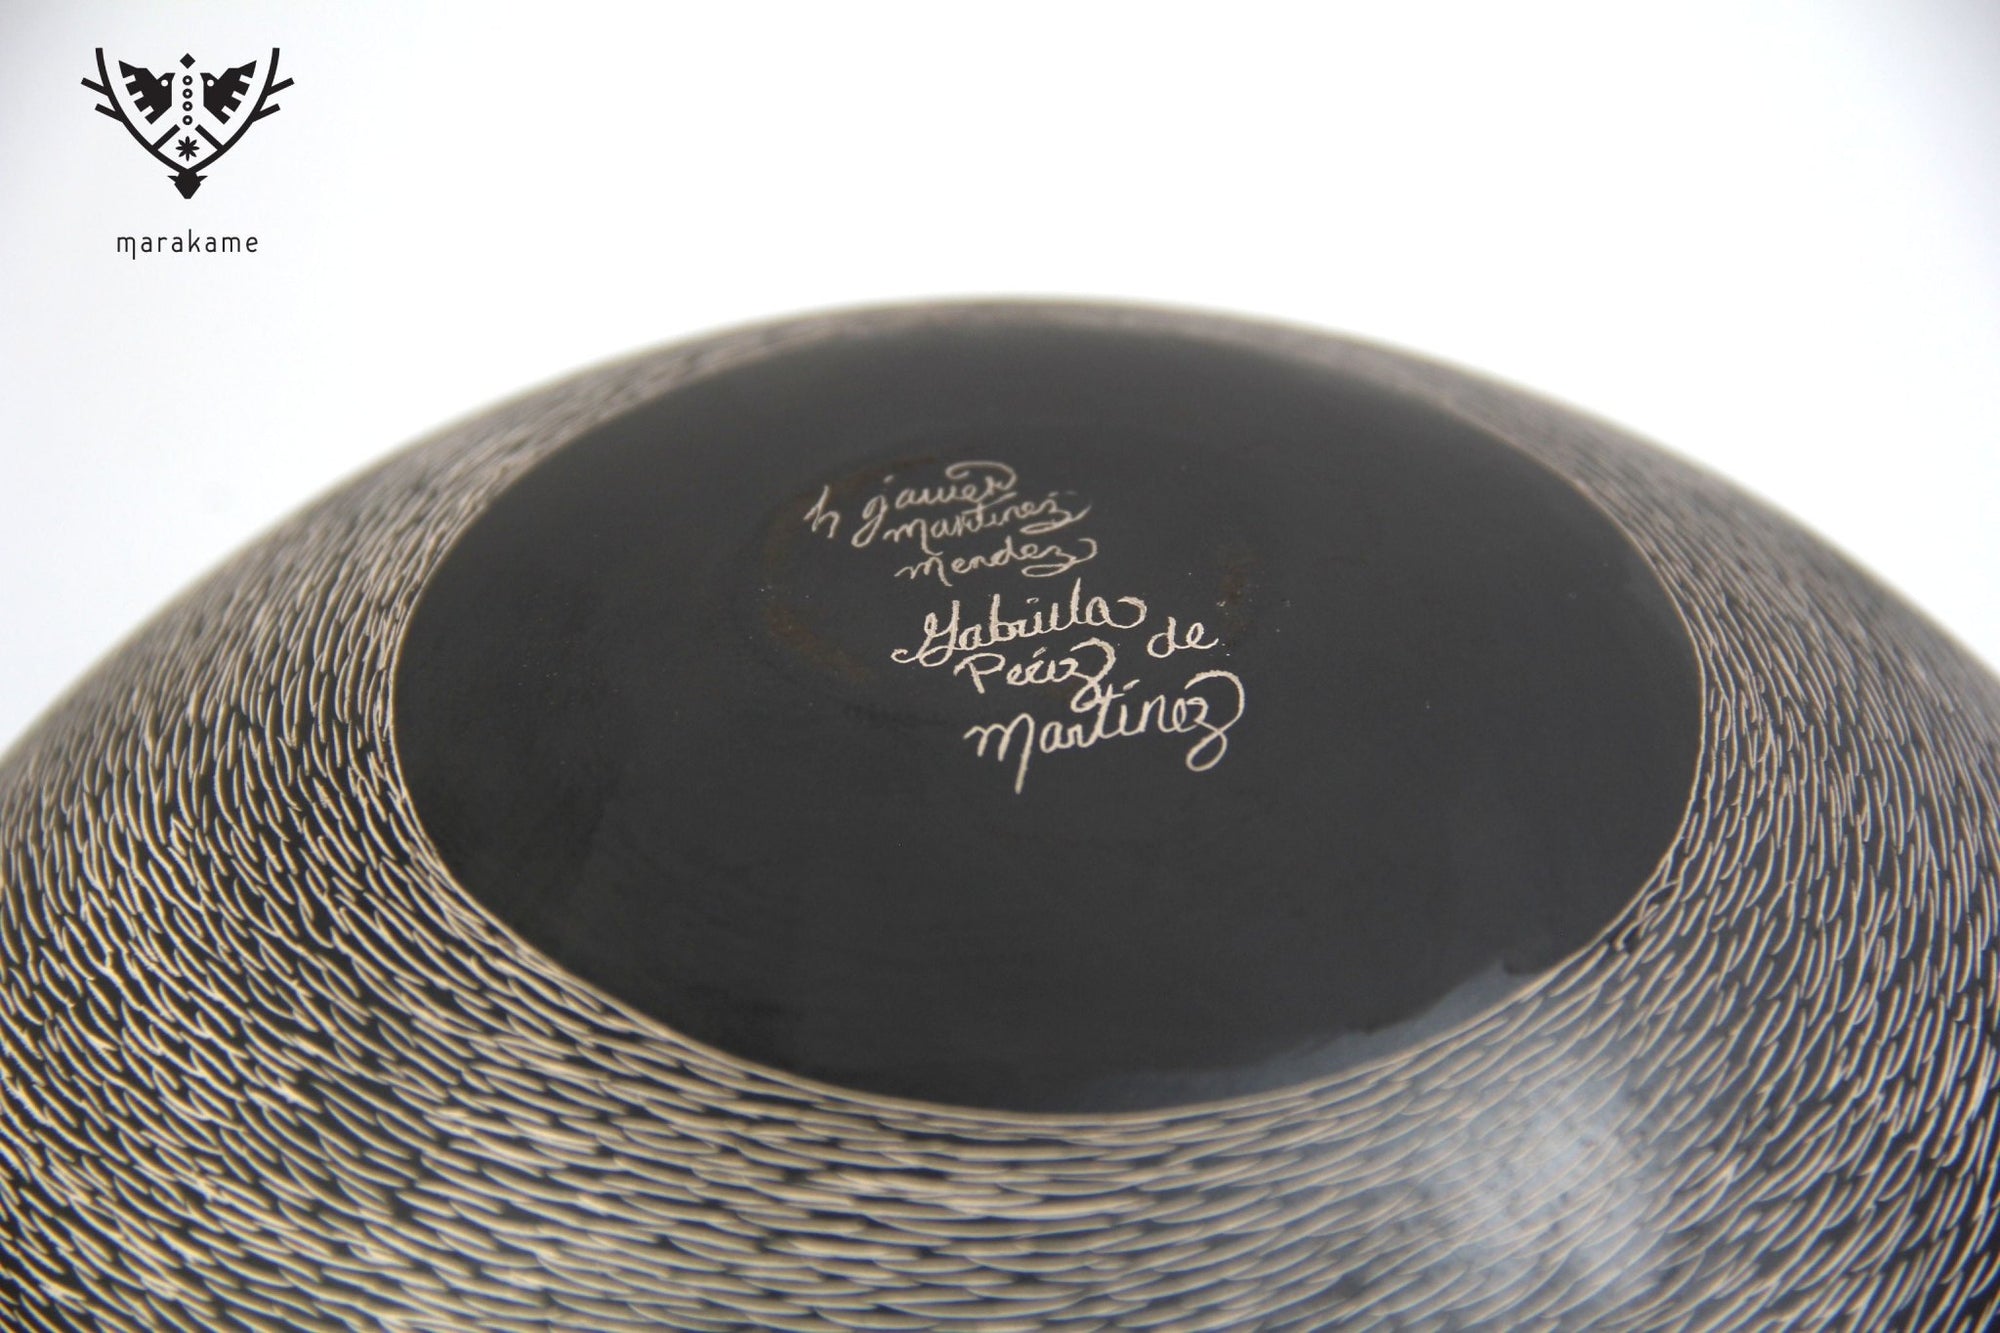 Mata Ortiz Ceramic - Day of the Dead - Papantla Flyers - Huichol Art - Marakame